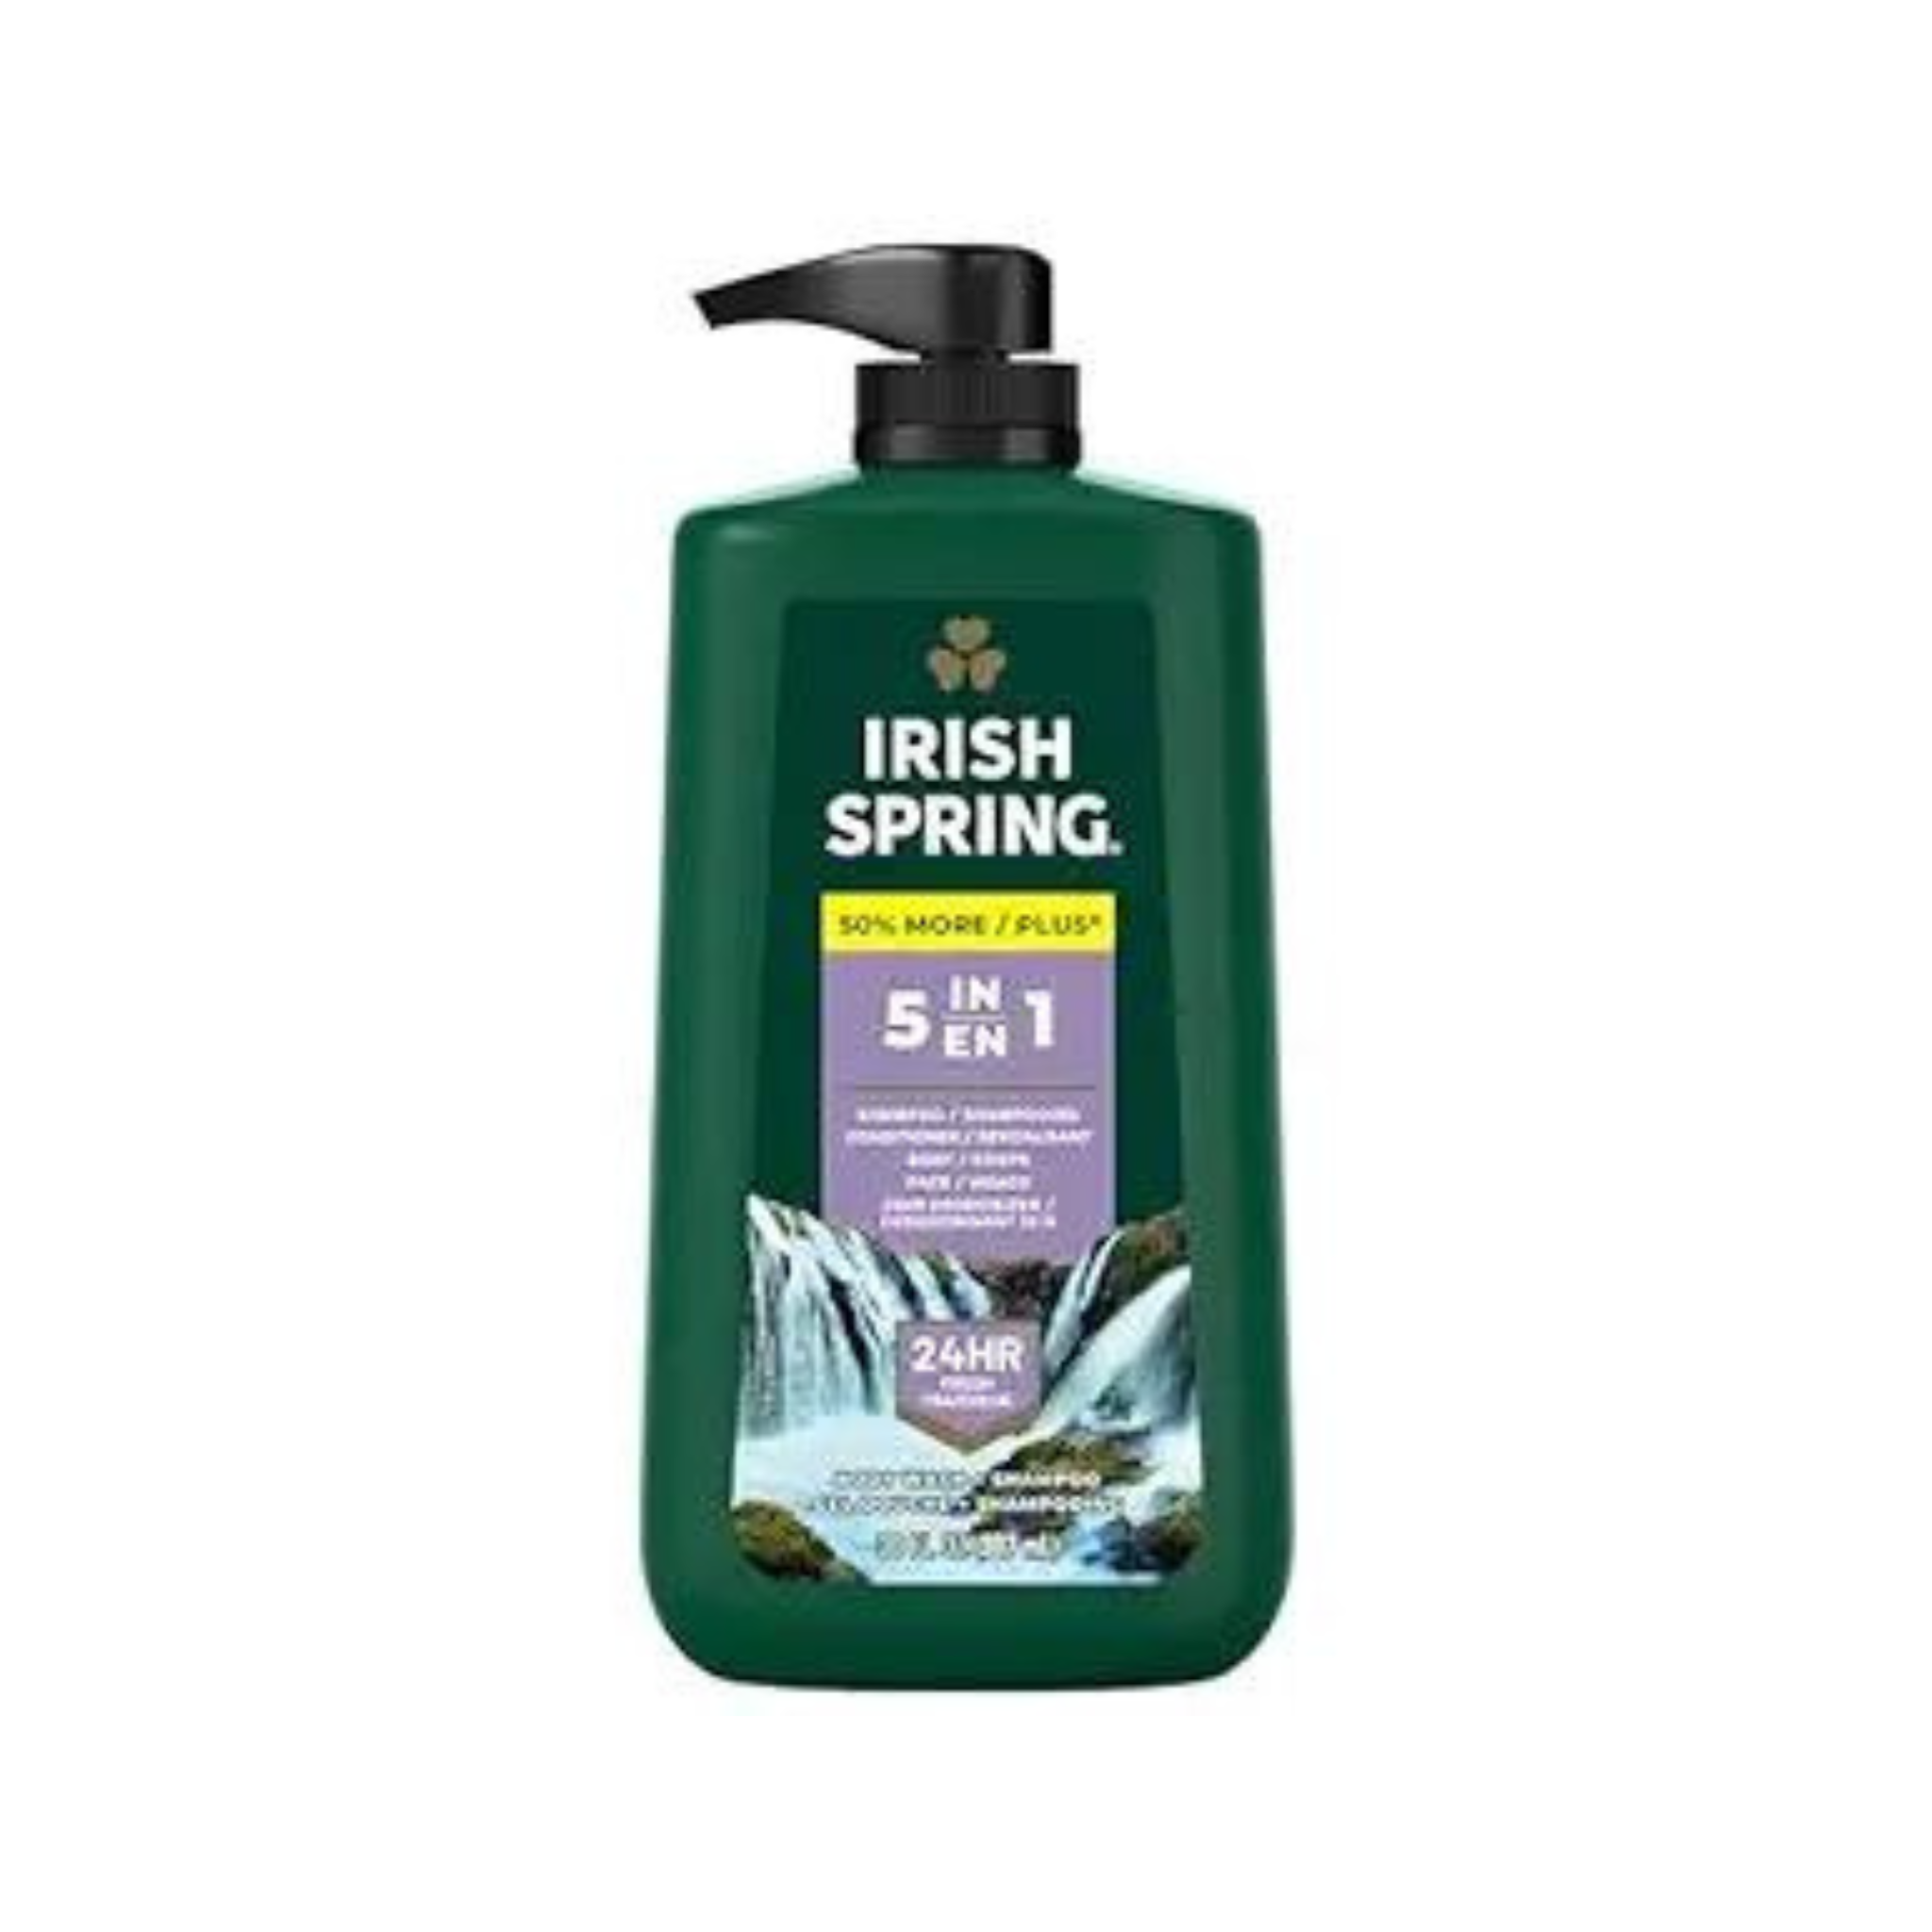 Irish Spring 5 in 1 Body Wash for Men, 30 Oz Pump Bottle